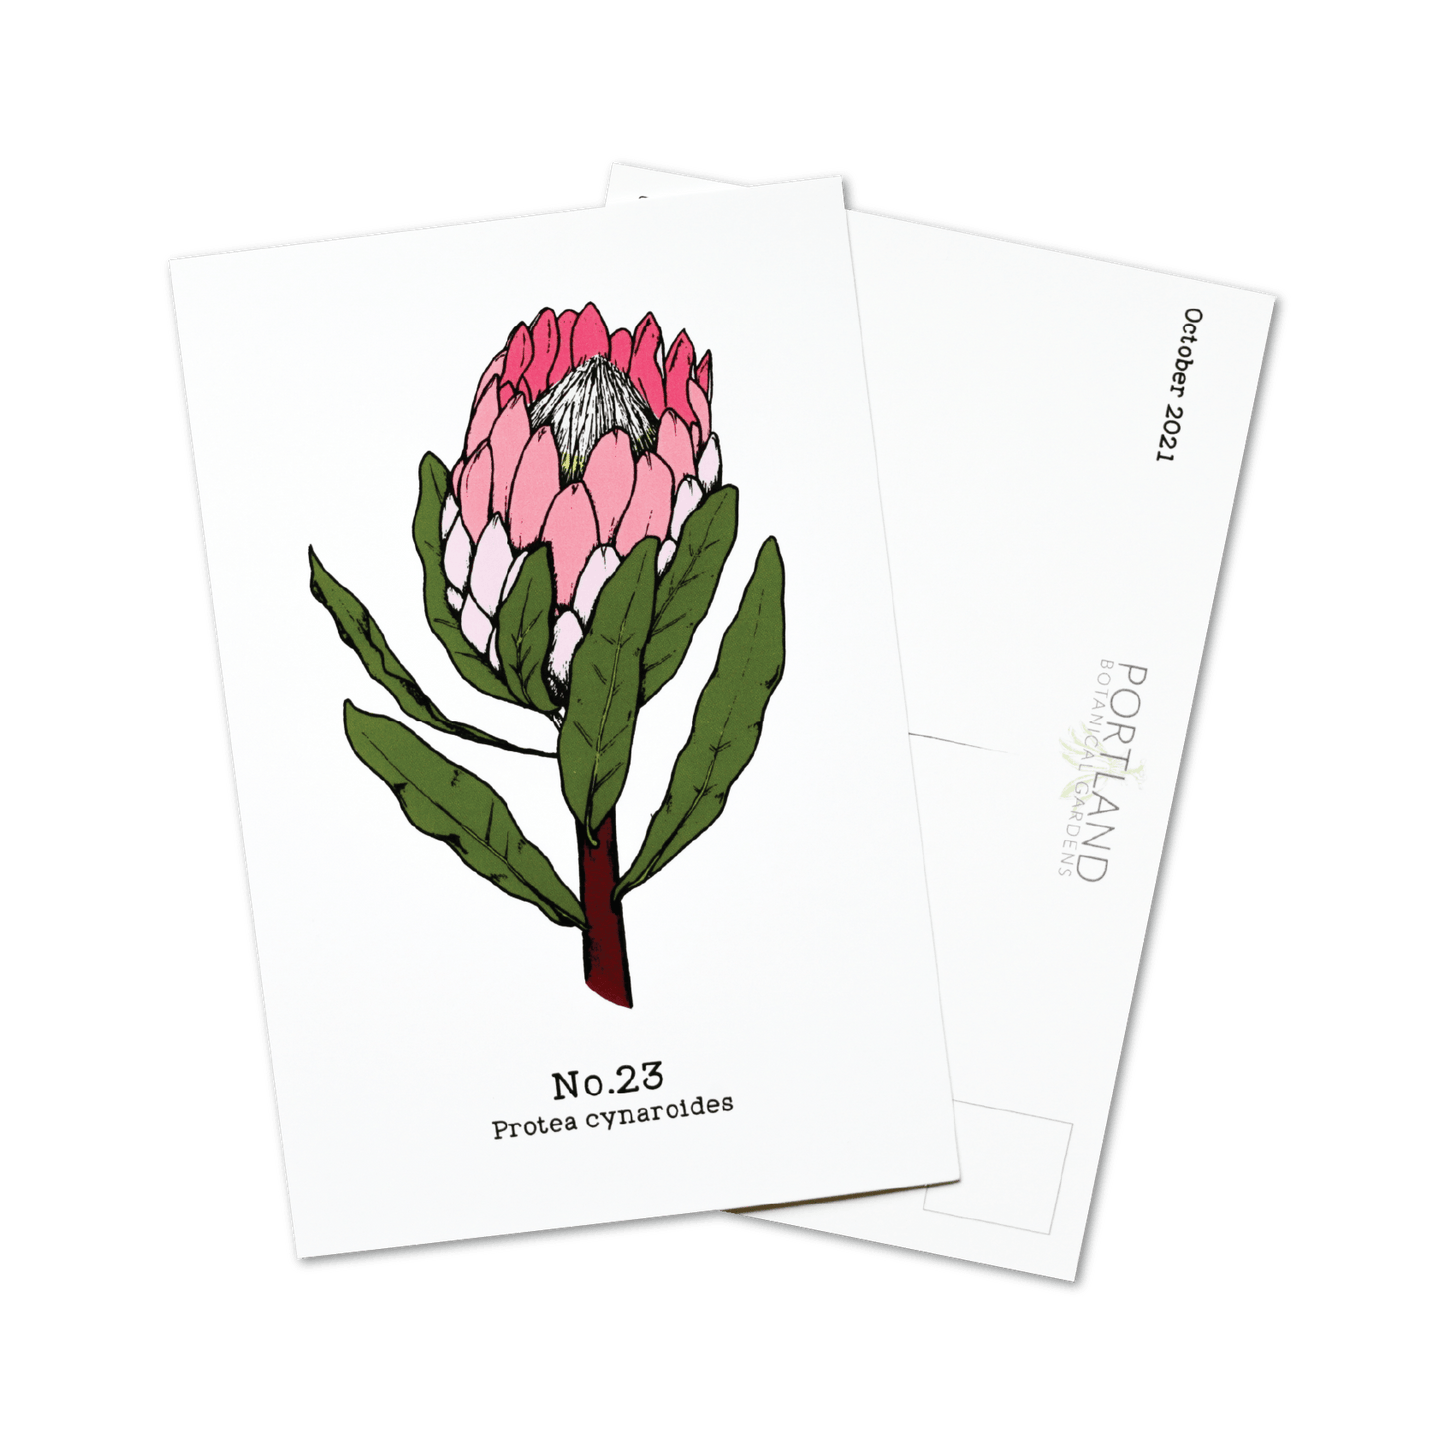 Flora of the Western Cape - 2021 Complete Postcard Set